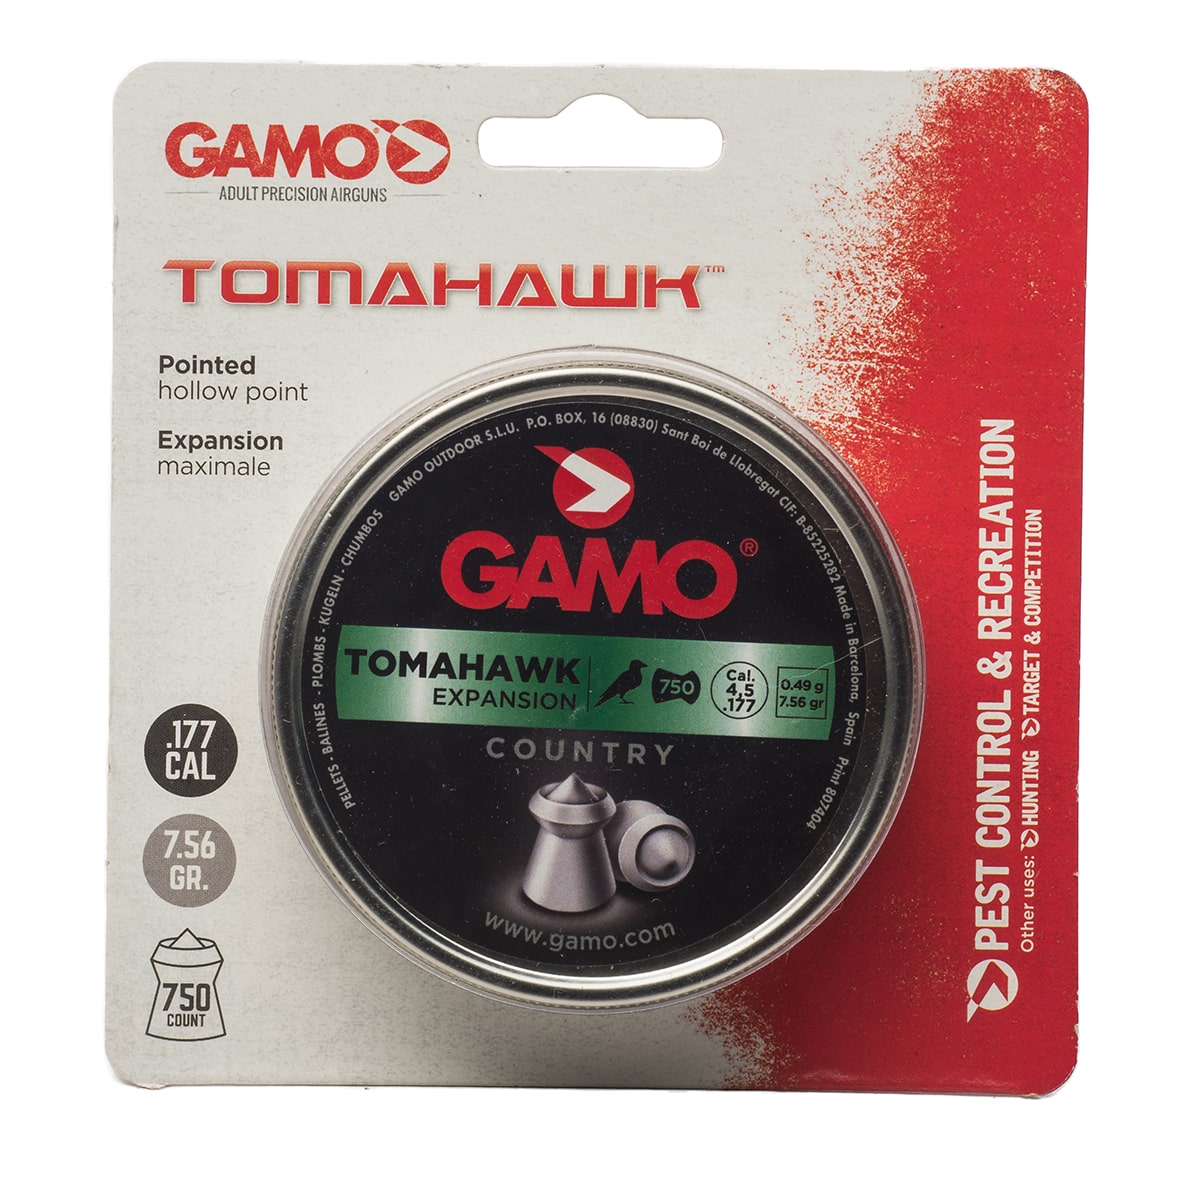 GAMO TOMAHAWK EXPANSION .177 (7.56GR) - 750's